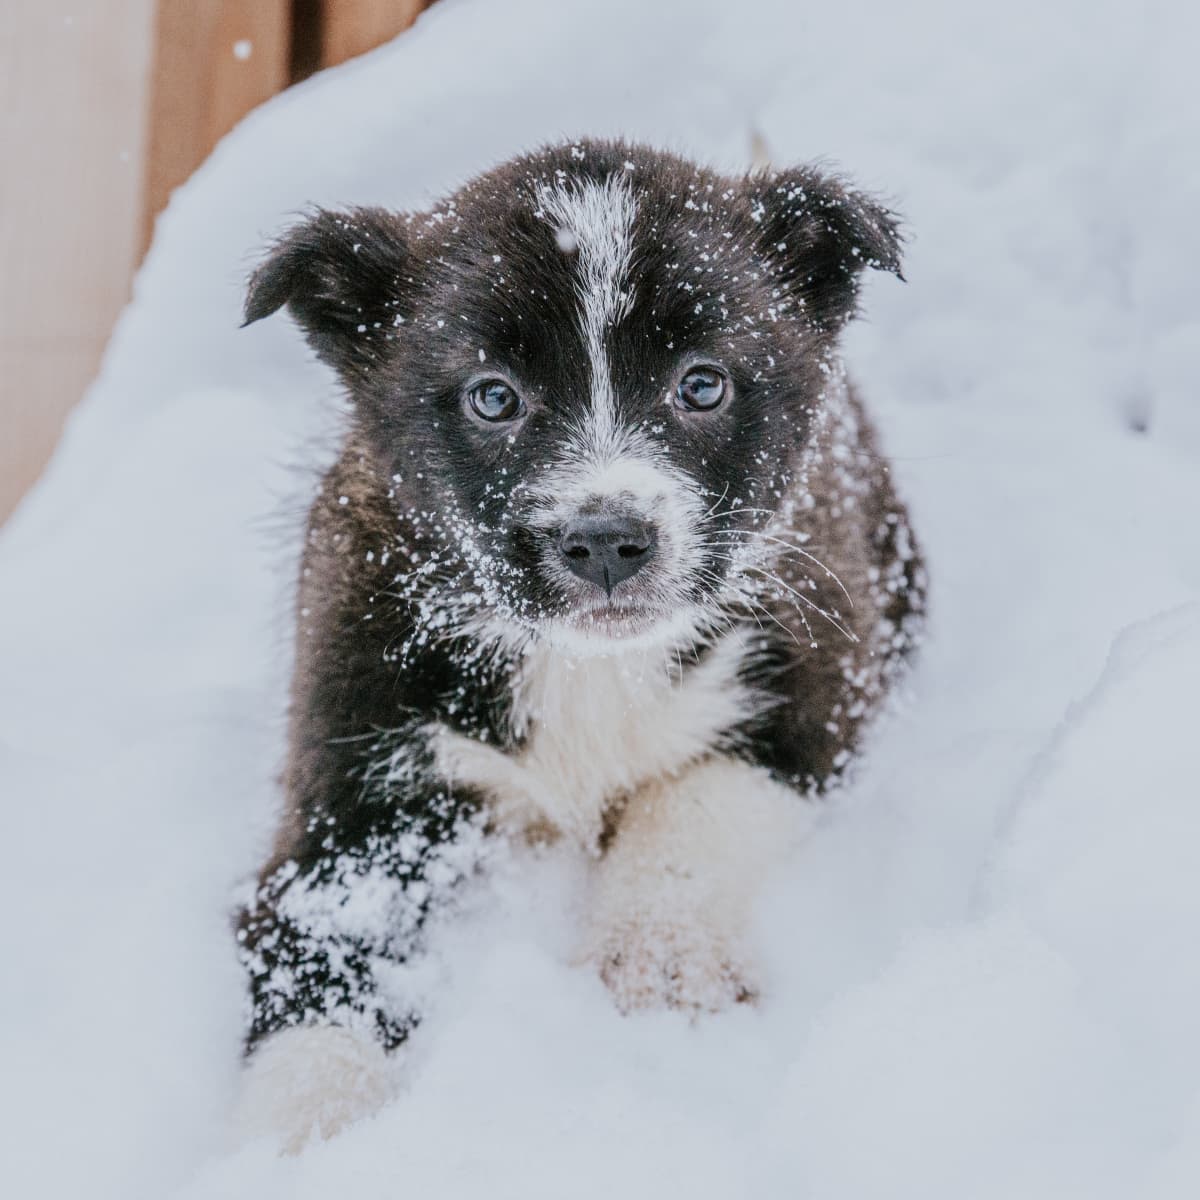 Powder Puppies: The Making of an Avalanche Dog - Ski Utah